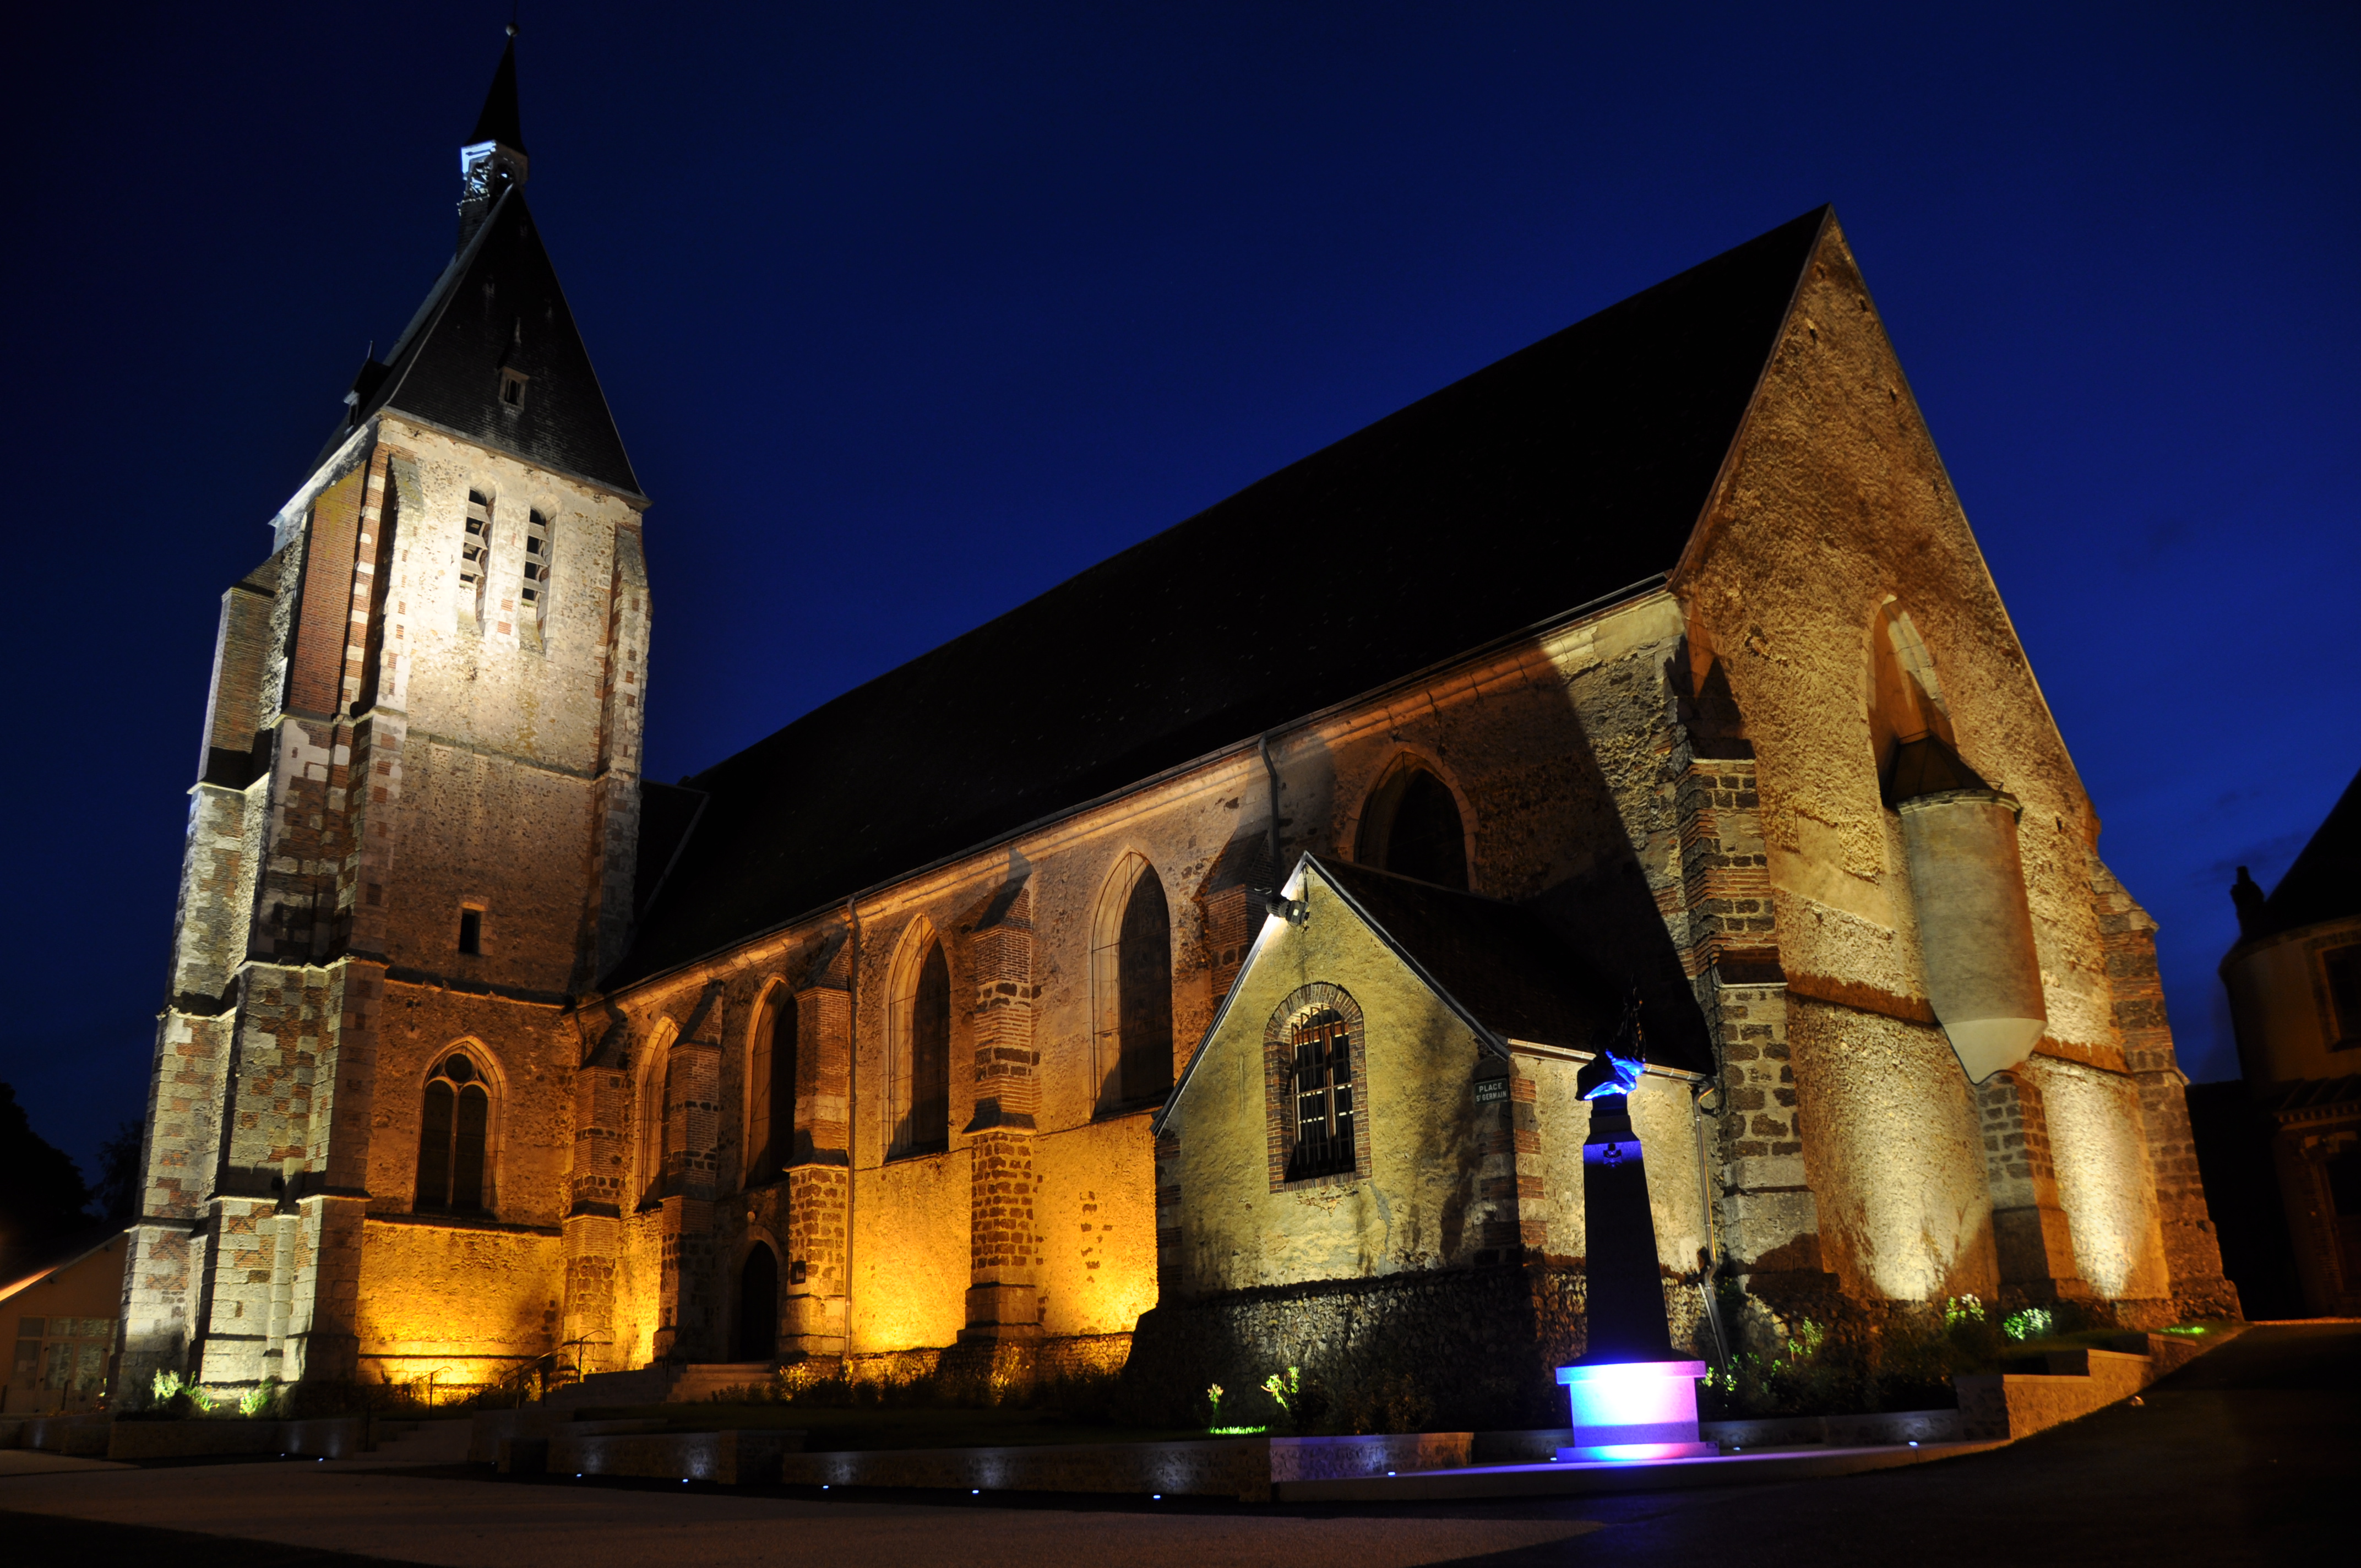 Illumination nocturne église de digny